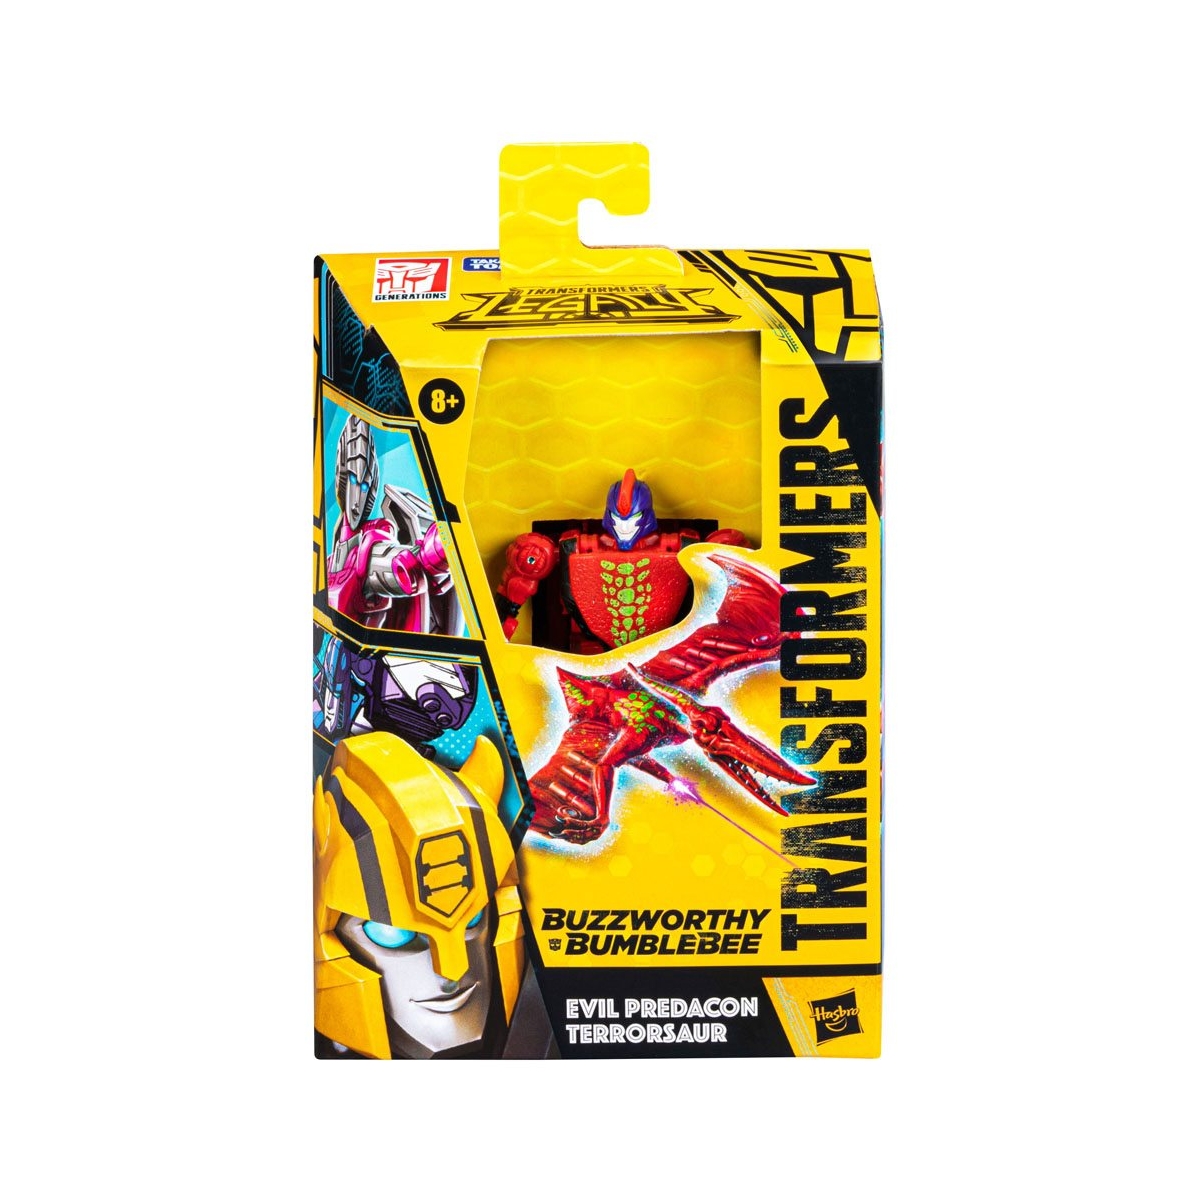 transformers-generations-legacy-buzzworthy-bumblebee-figurine-deluxe-class-2022-evil-predacon-terrorsaur-14-cm